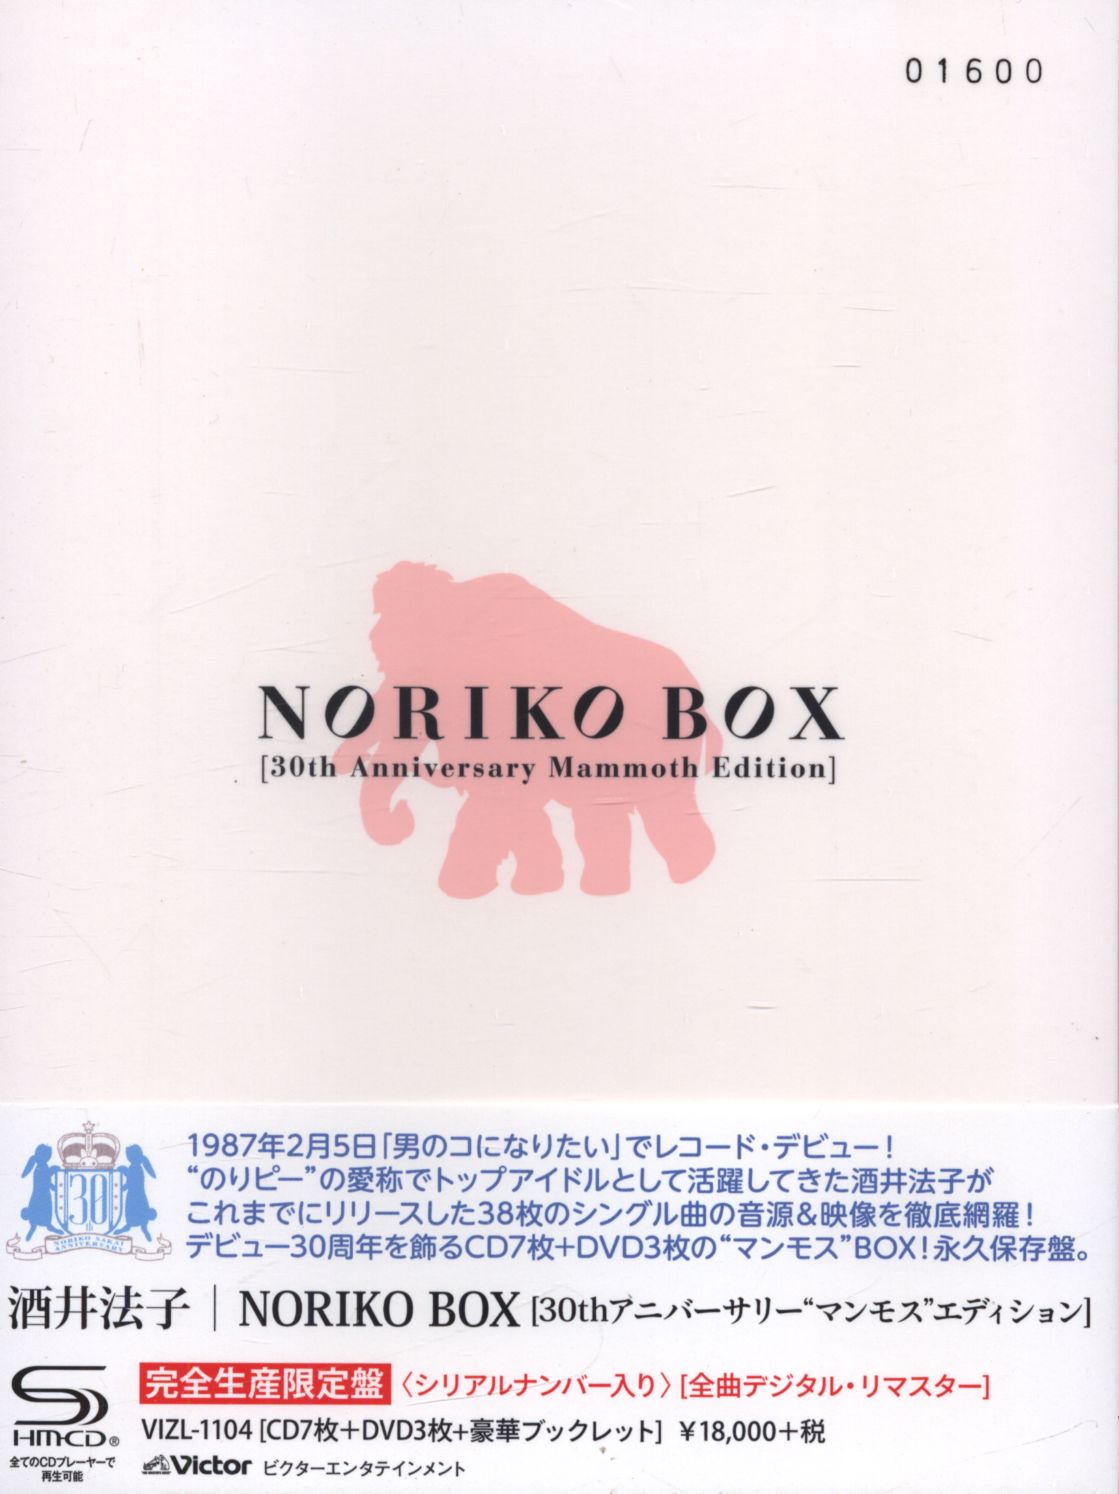 24a ☆ay NORIKO BOX 酒井法子 - hdcarcovers.co.uk